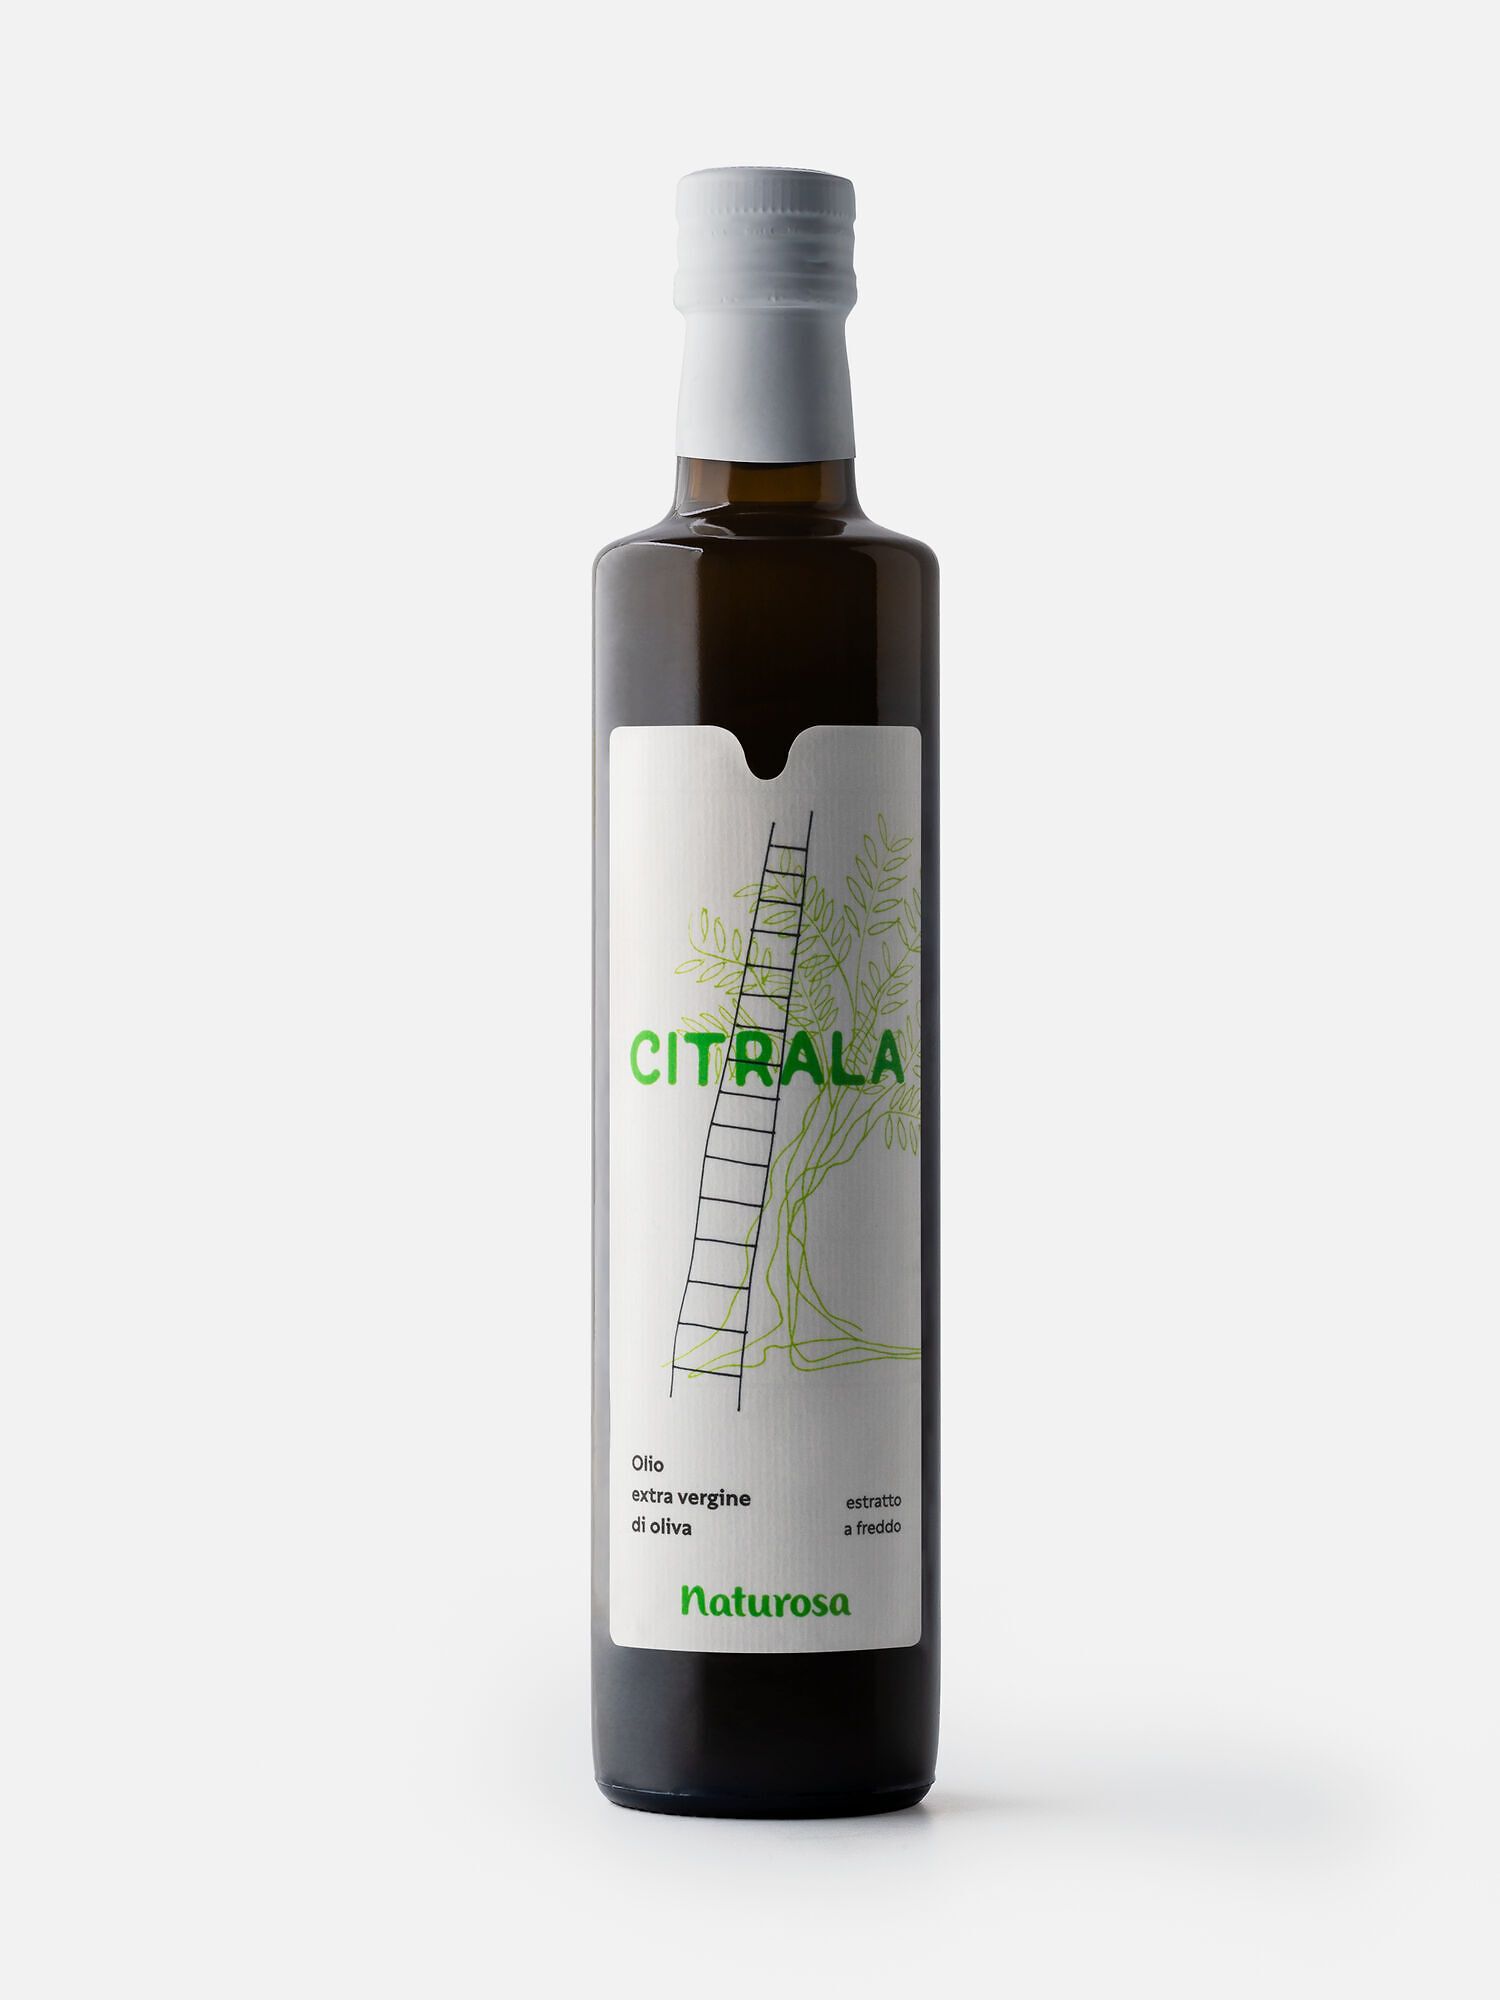 Bottiglia olio Citrala marchio Naturosa